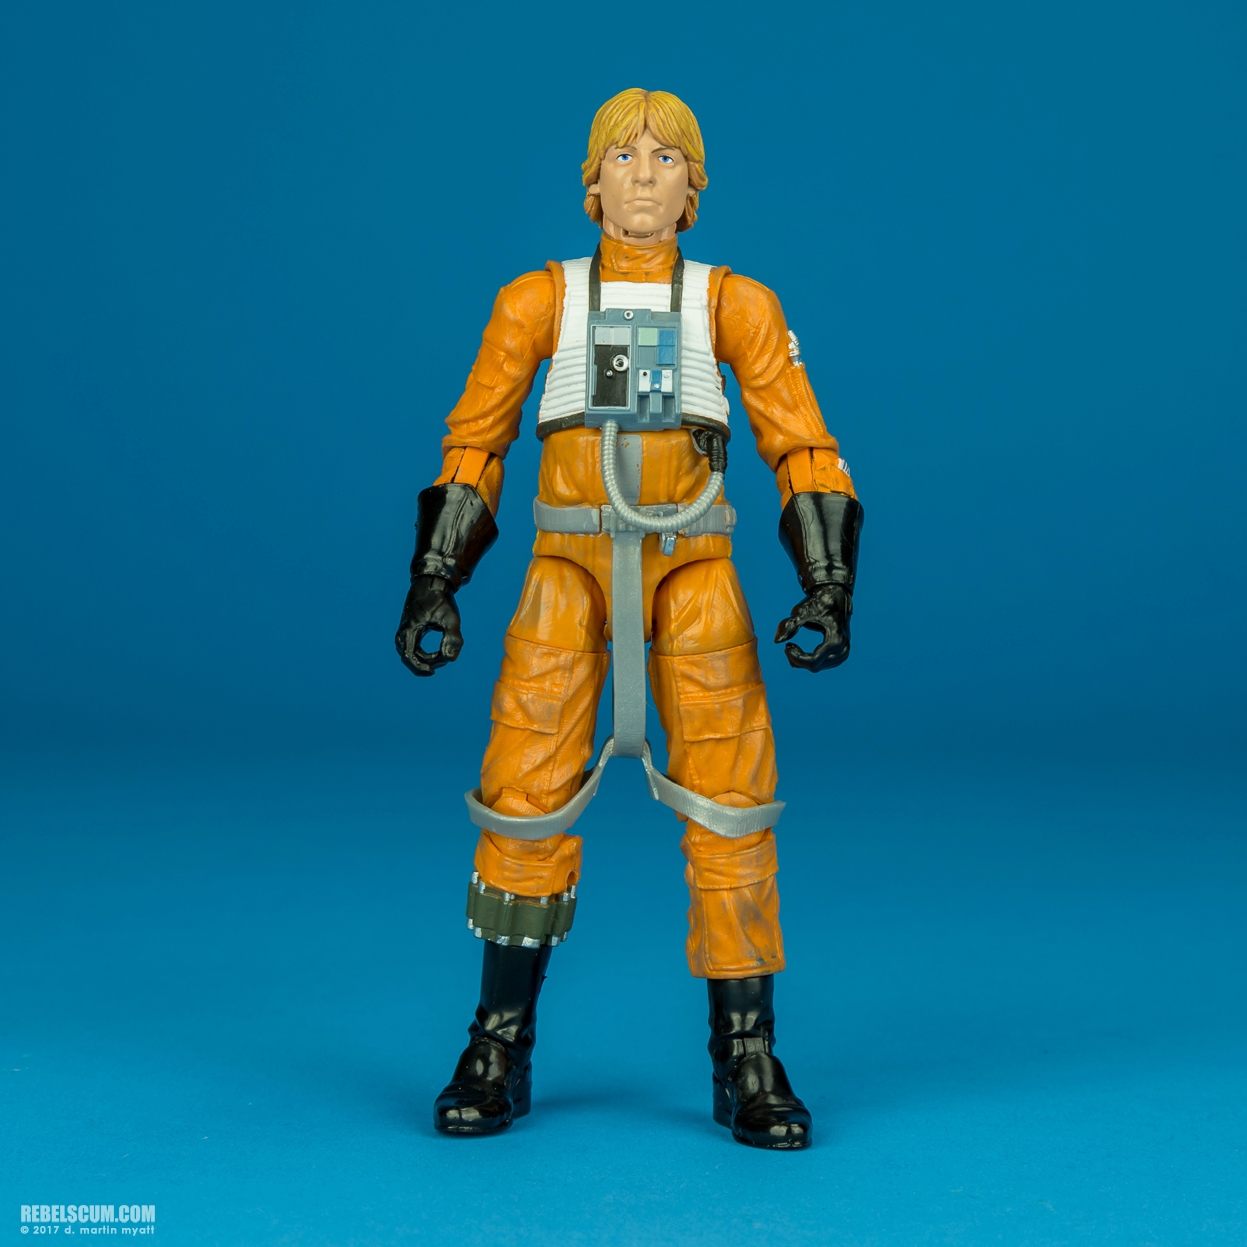 Luke-Skywalker-X-Wing-Pilot-40th-Anniversary-6-inch-001.jpg